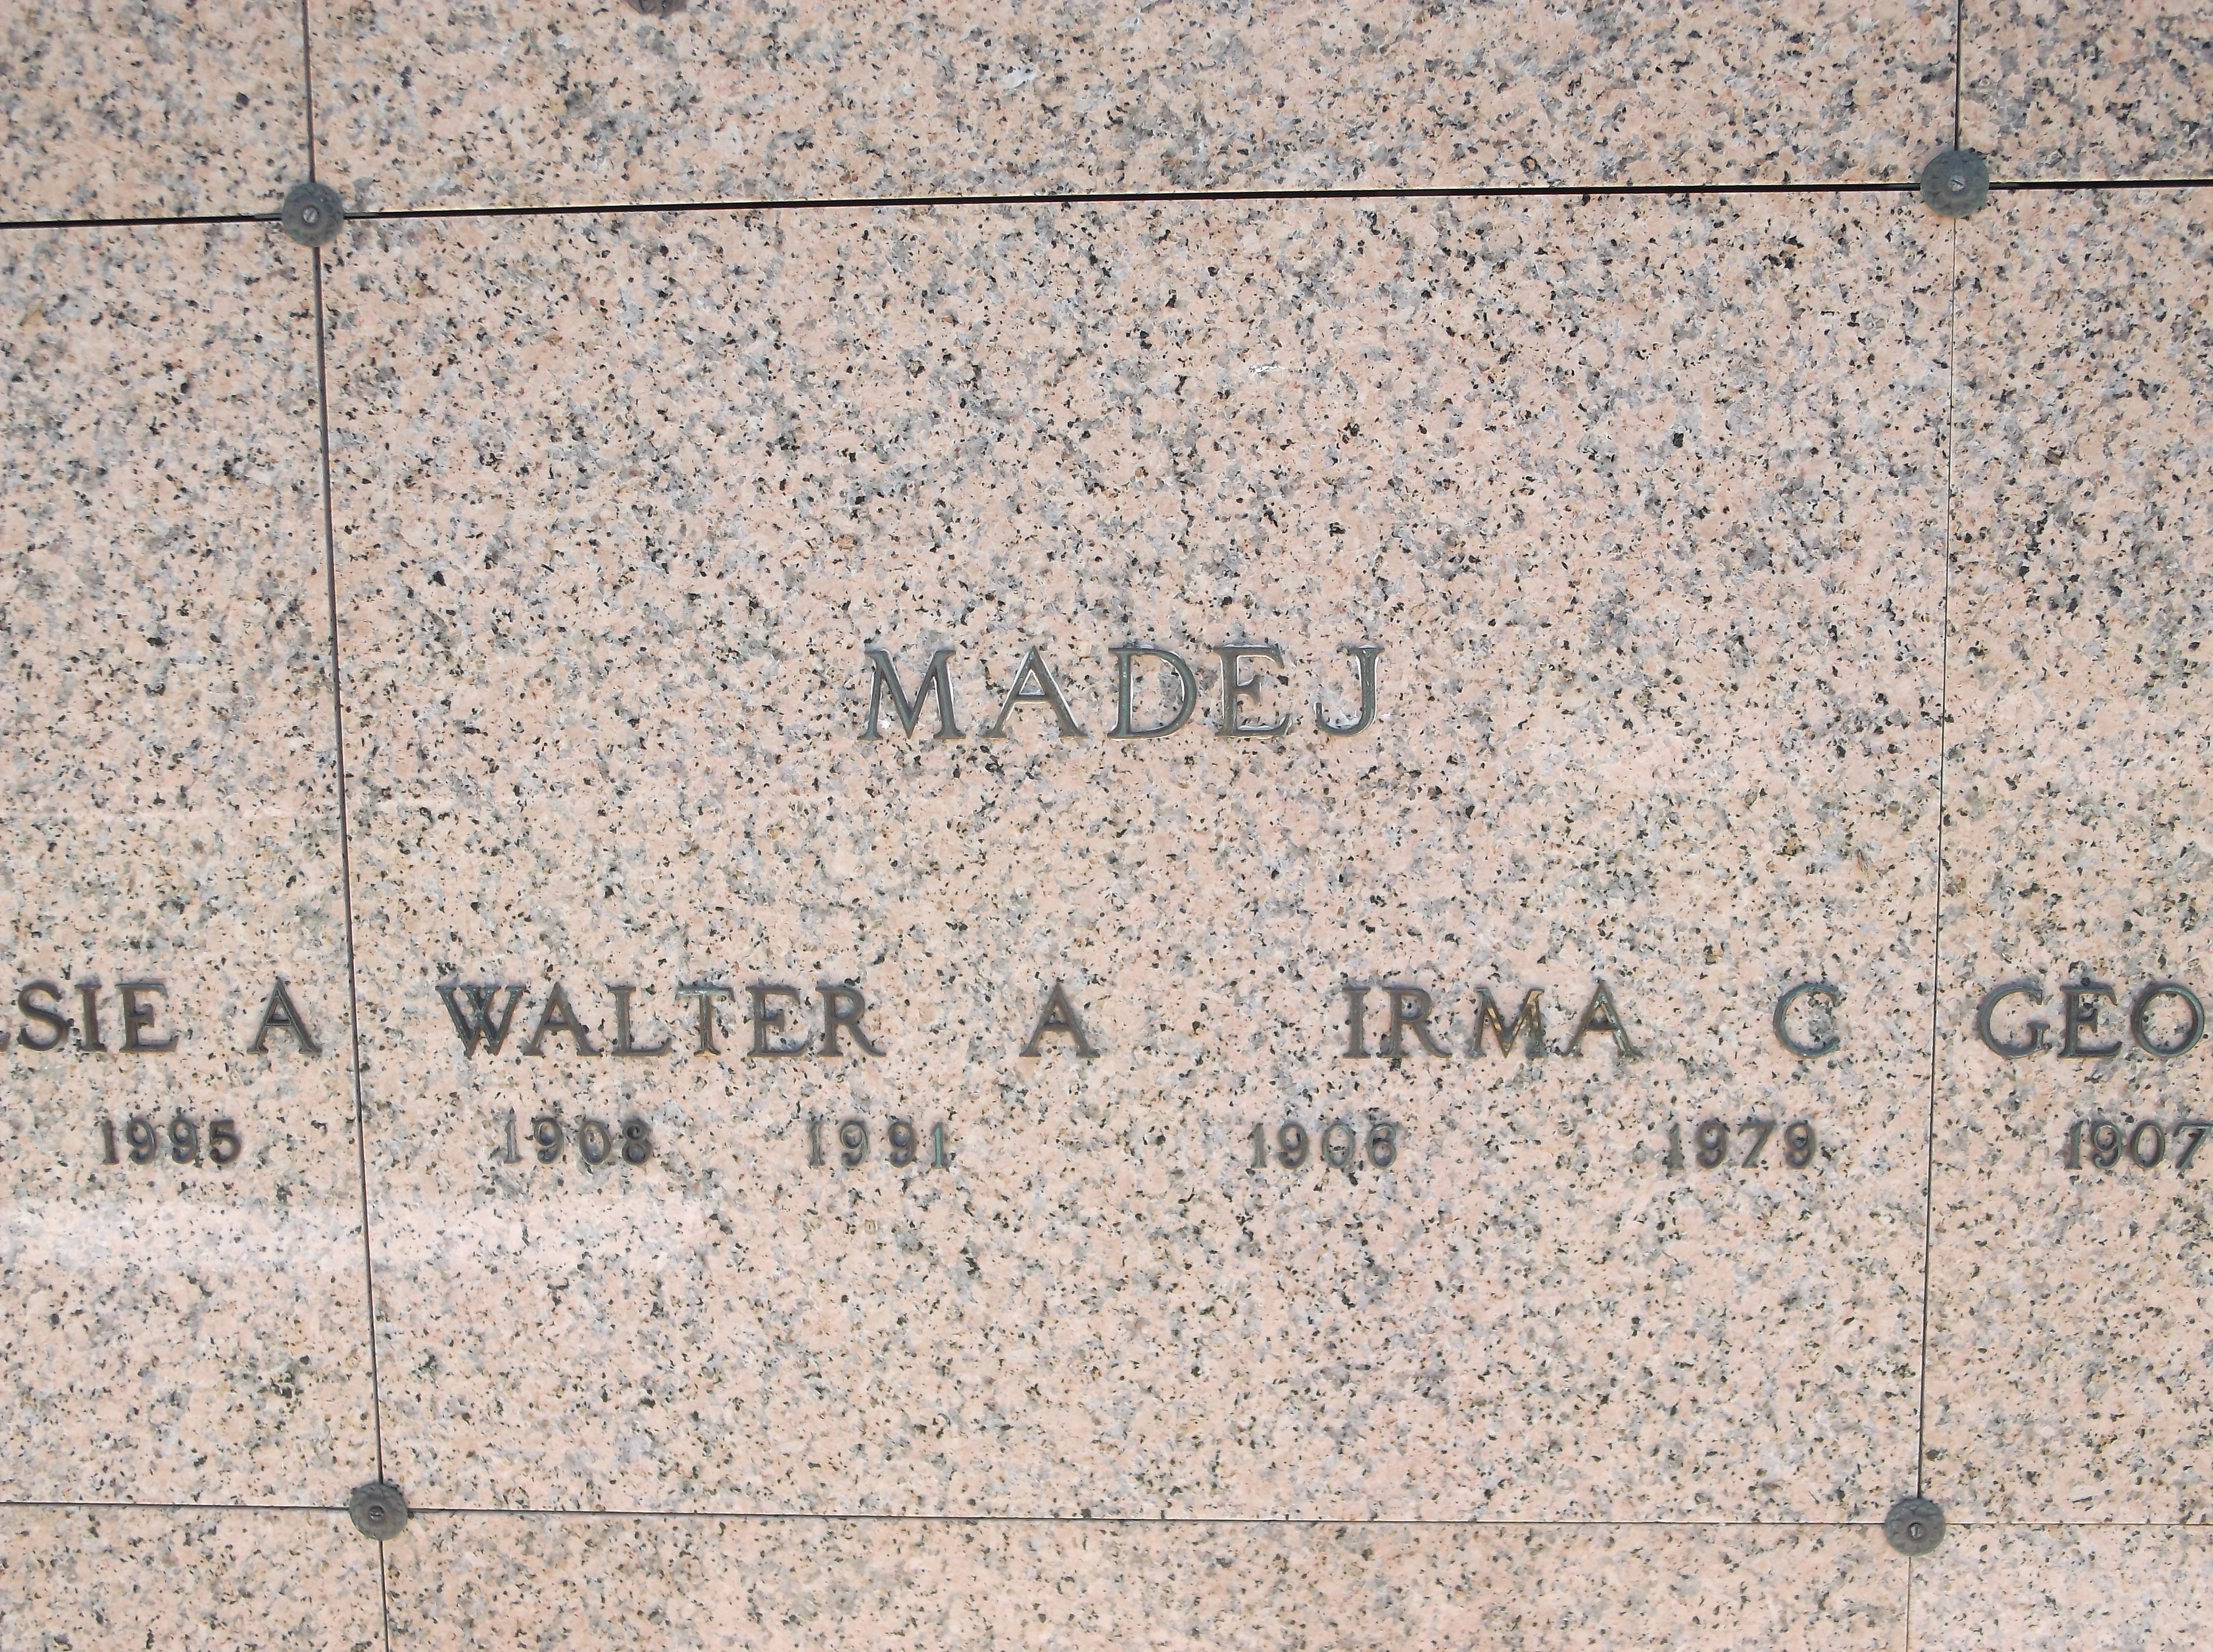 Walter A Madej